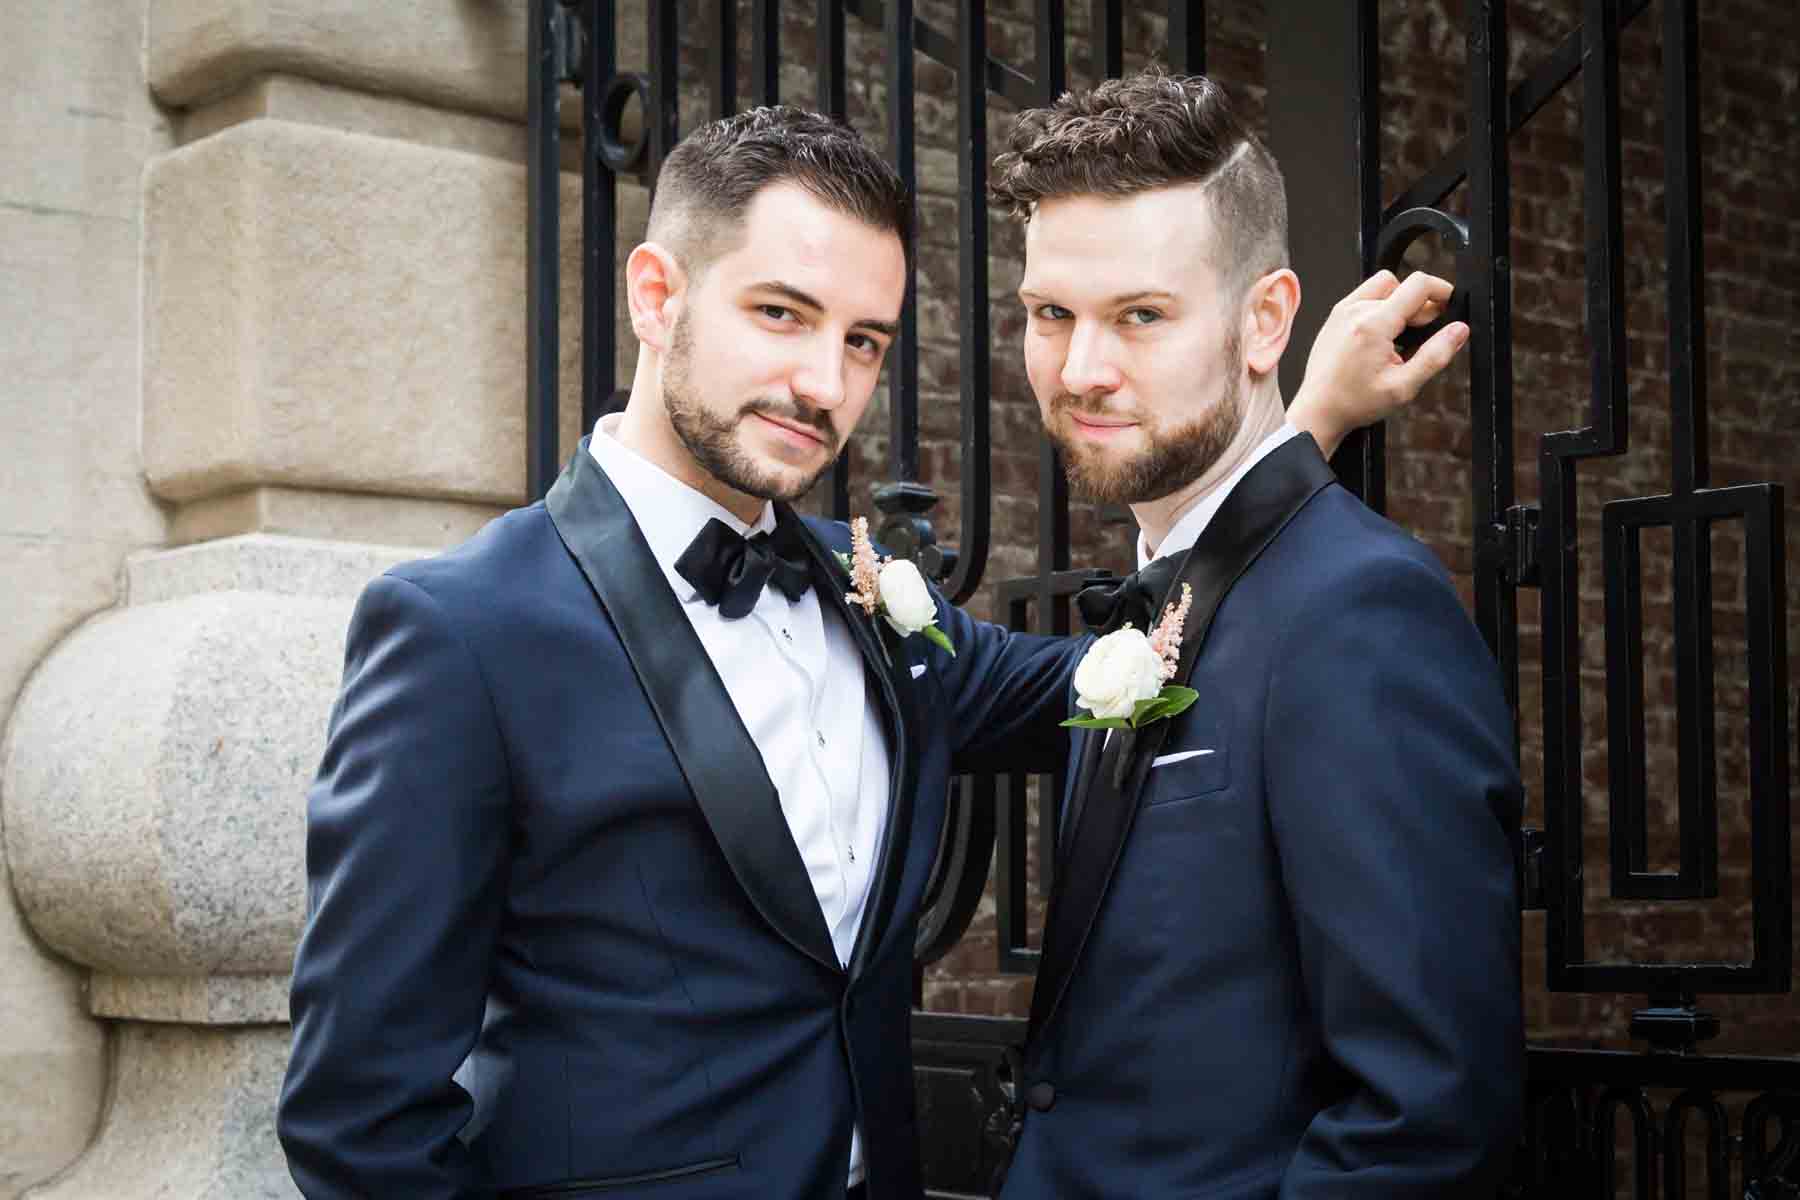 Wedding portraits of two grooms The Dakota apartment building